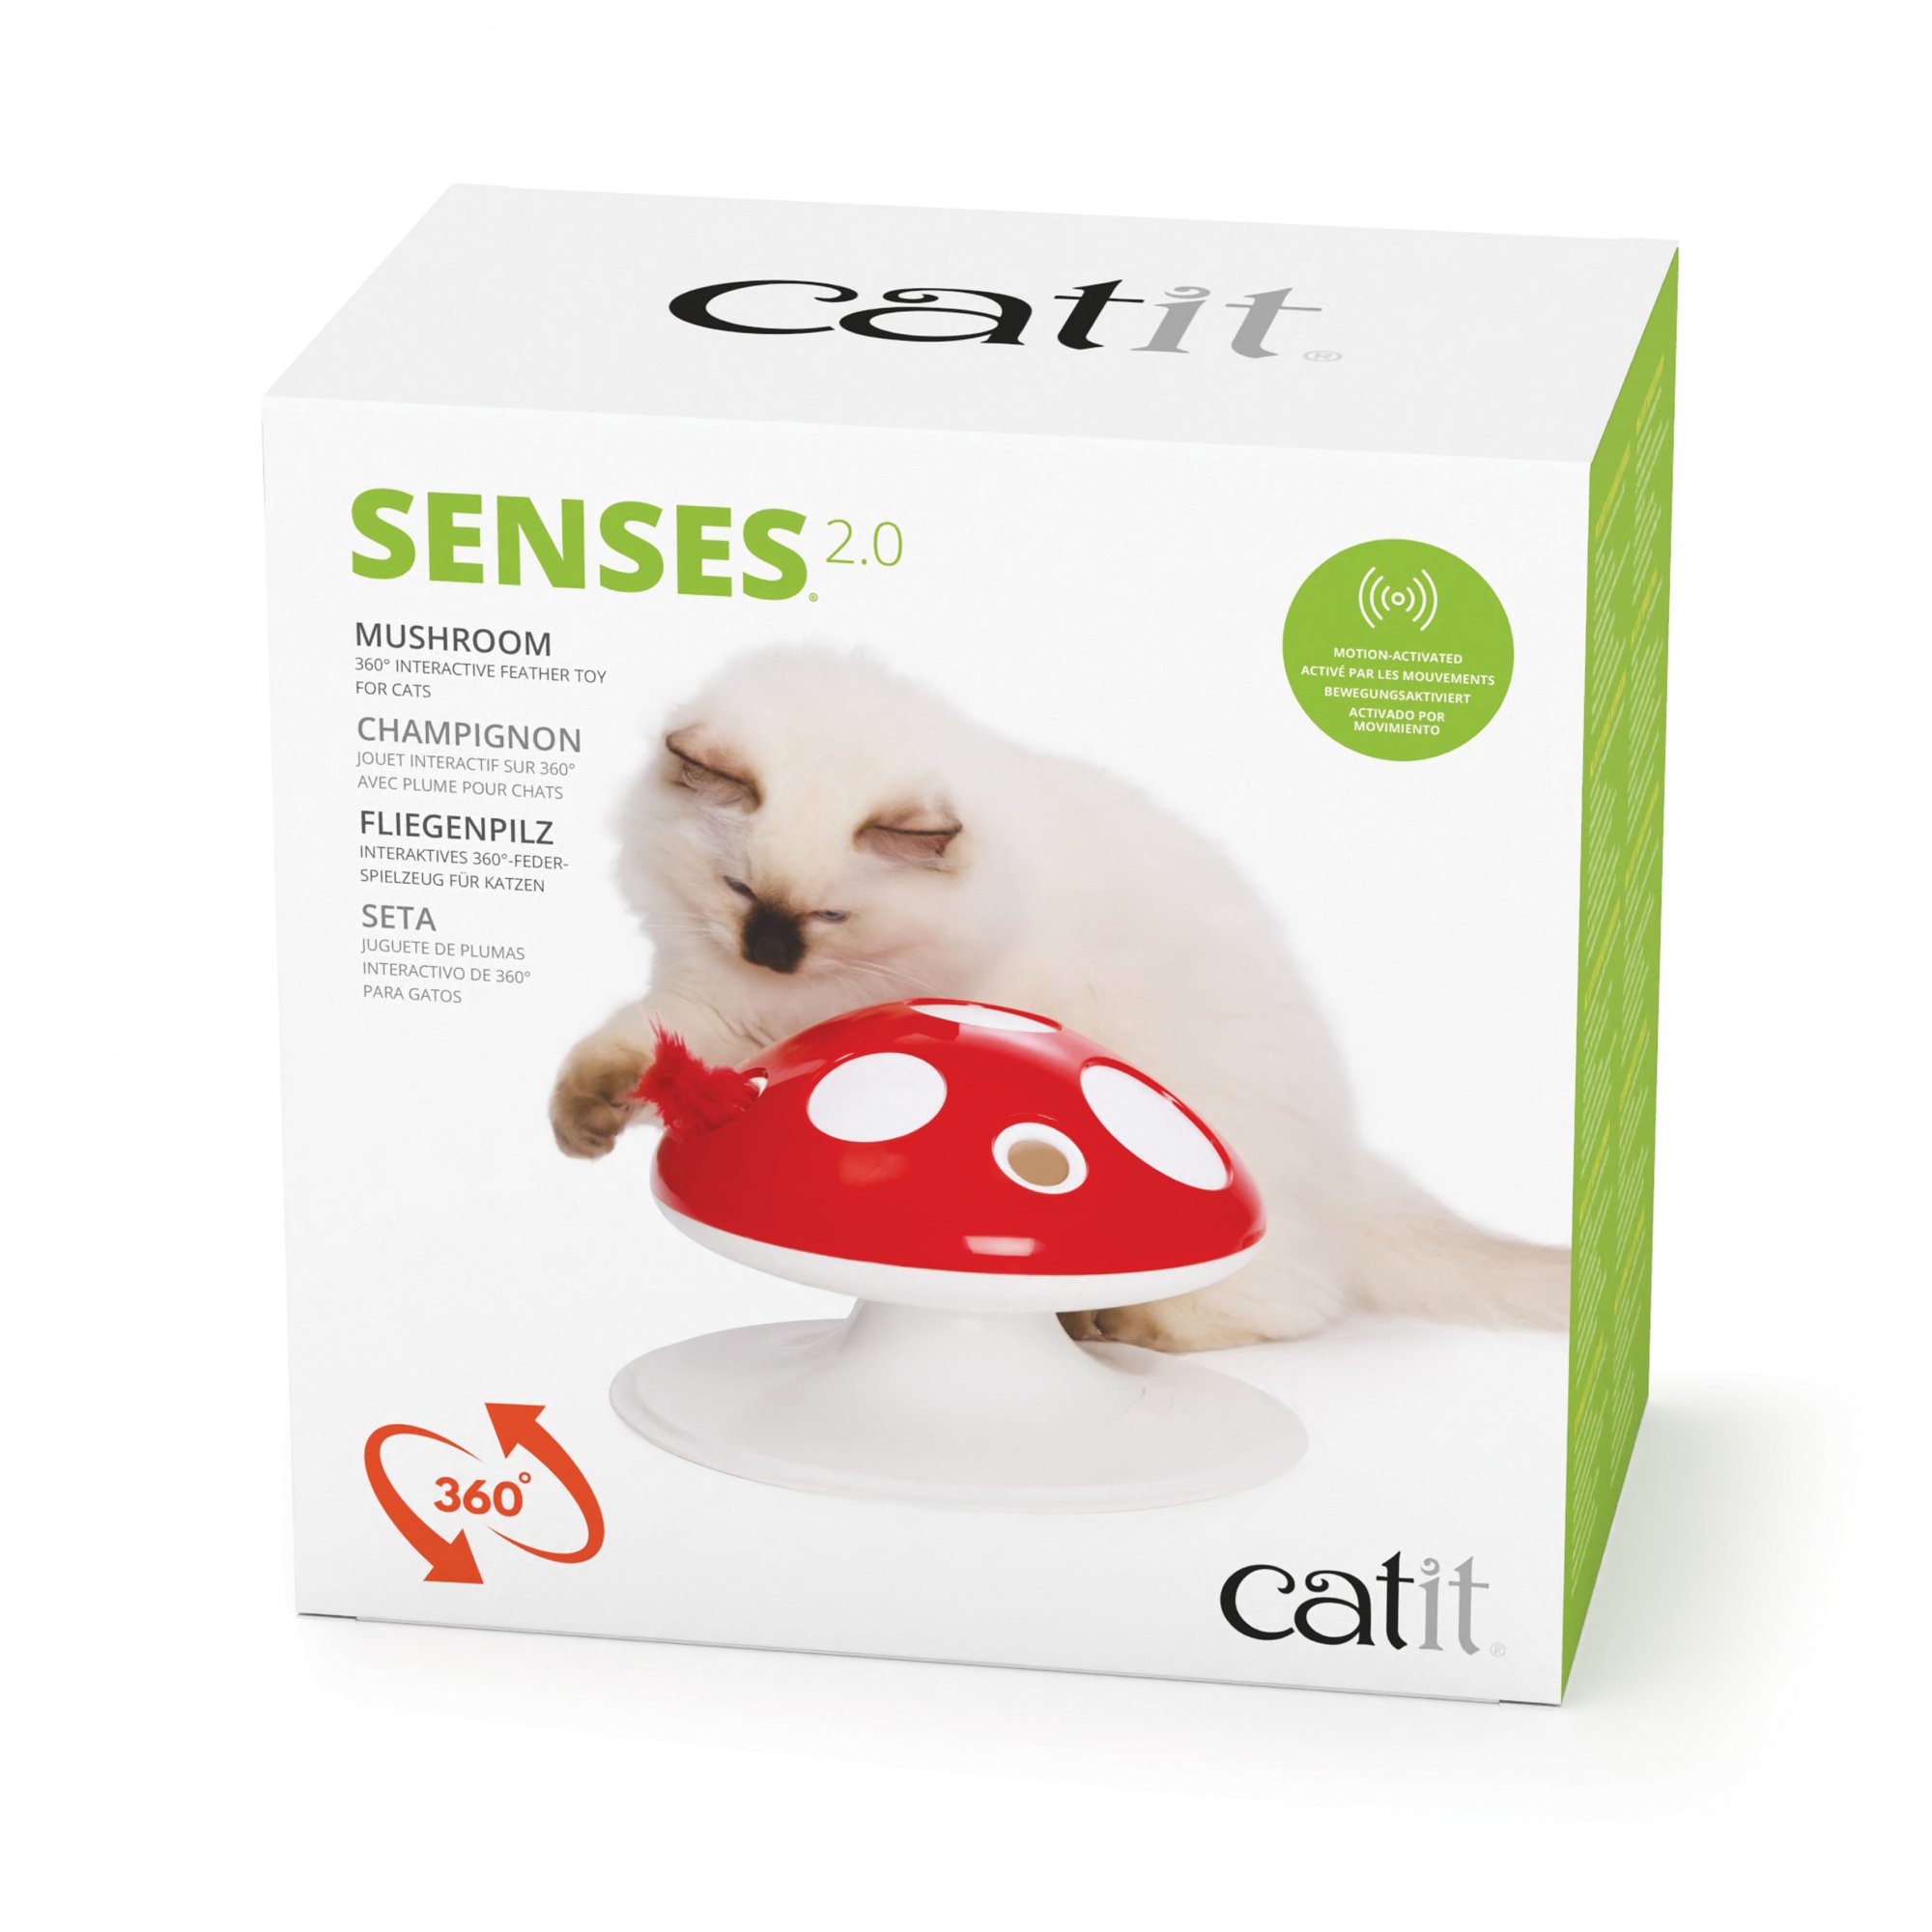 Catit Senses 2.0 Interaktiver Pilz für Katzen